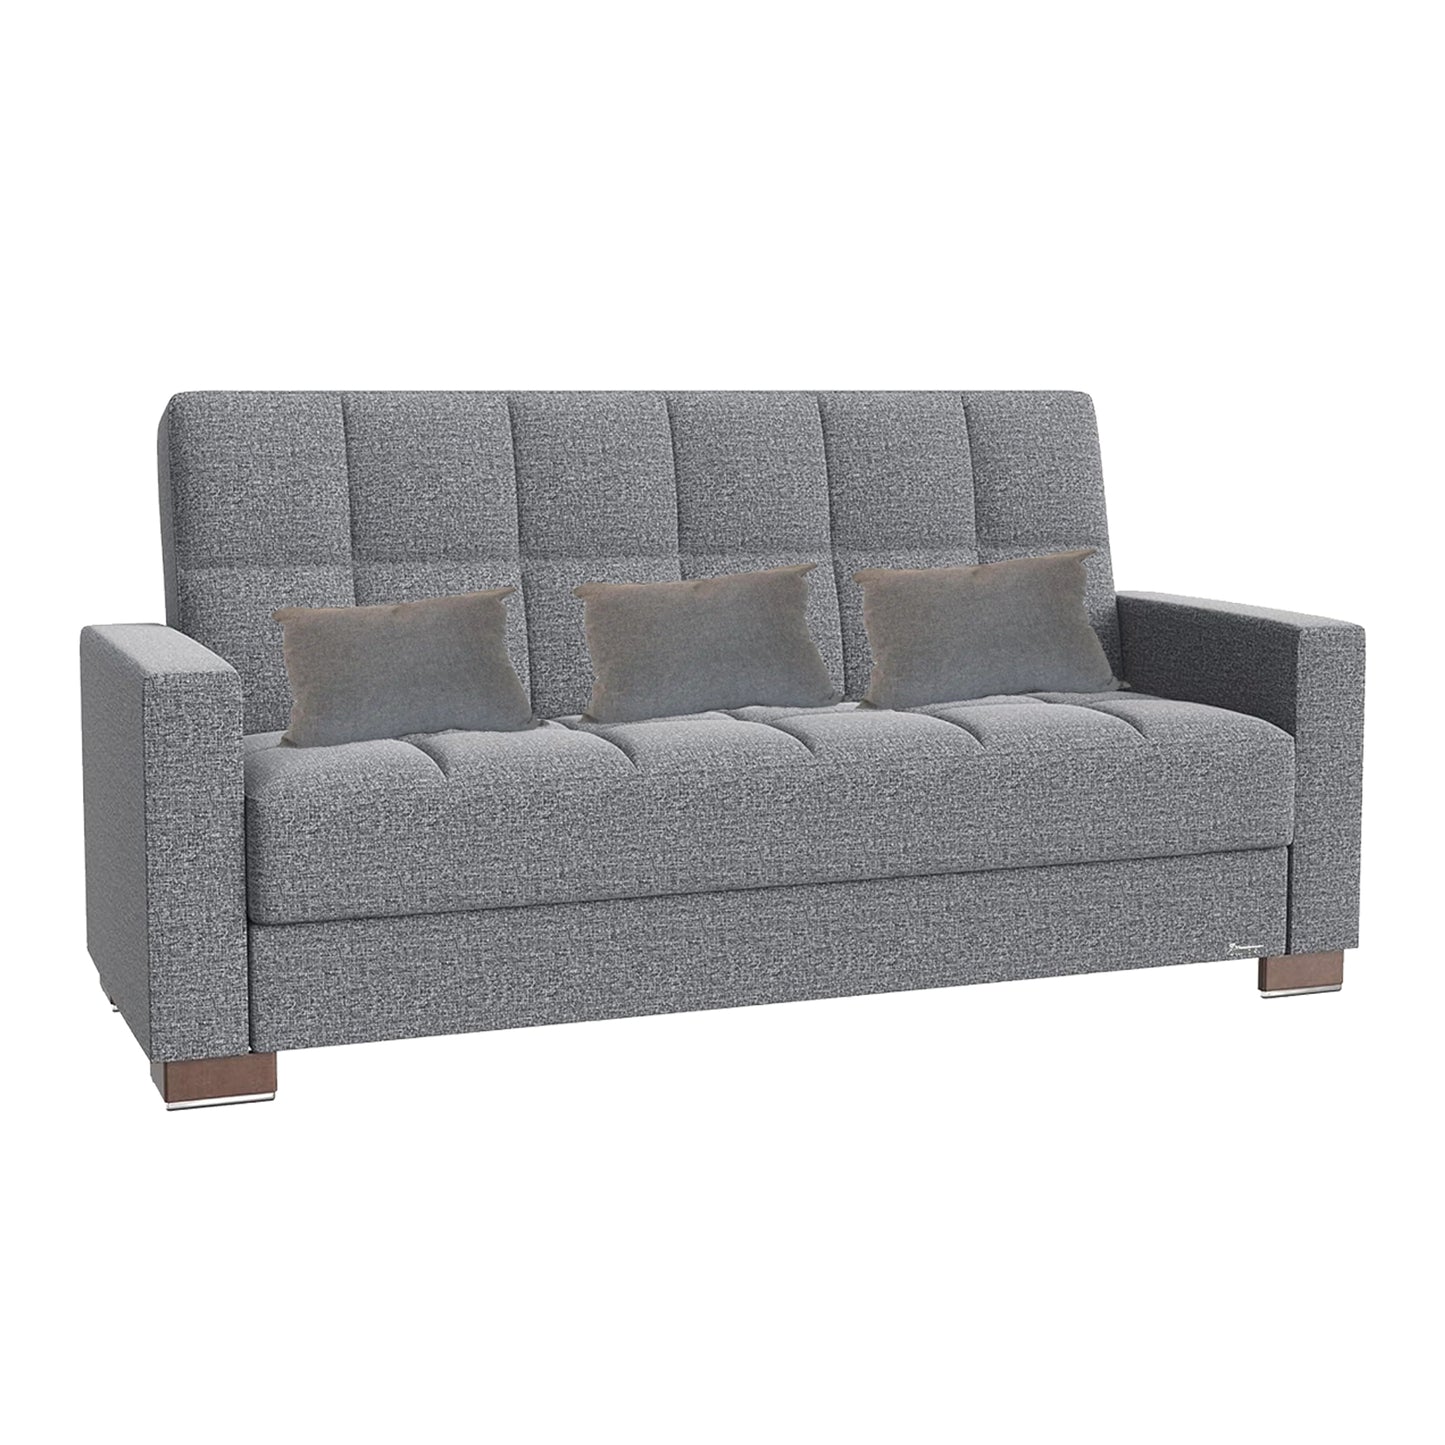 Monet Sleeper Couch Grey